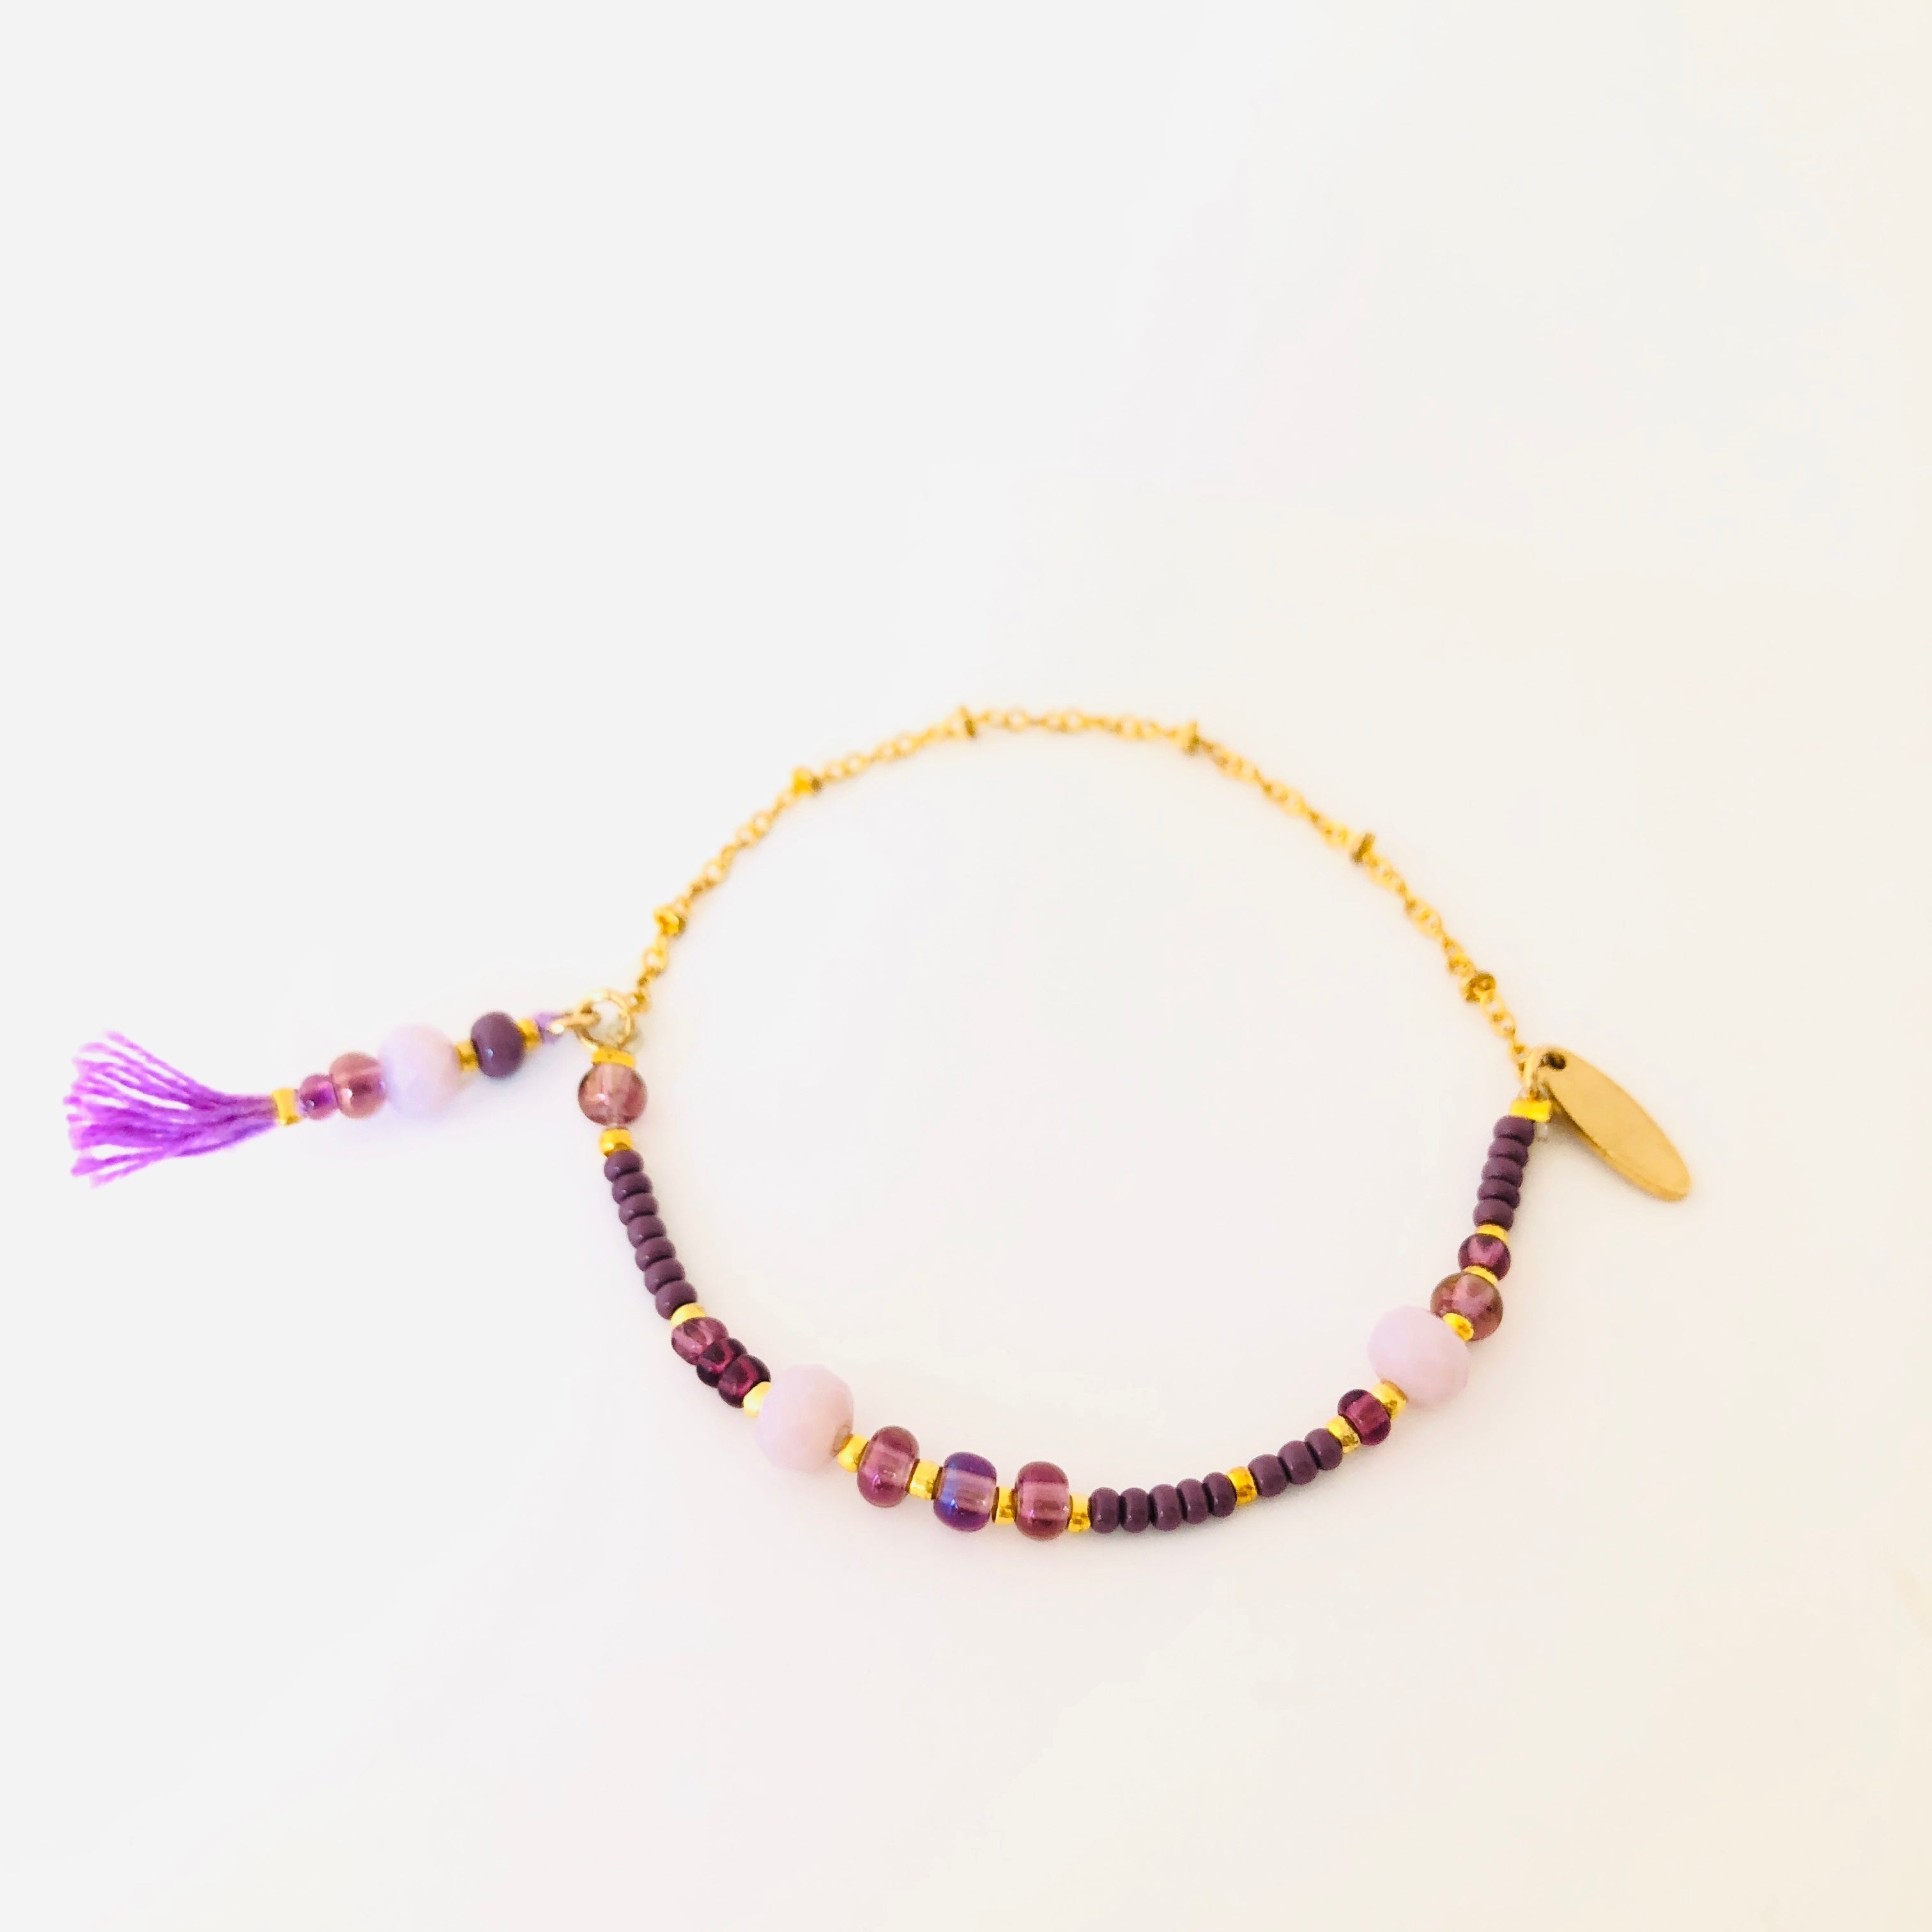 Bead and Chain Bracelet - Studio Maya 